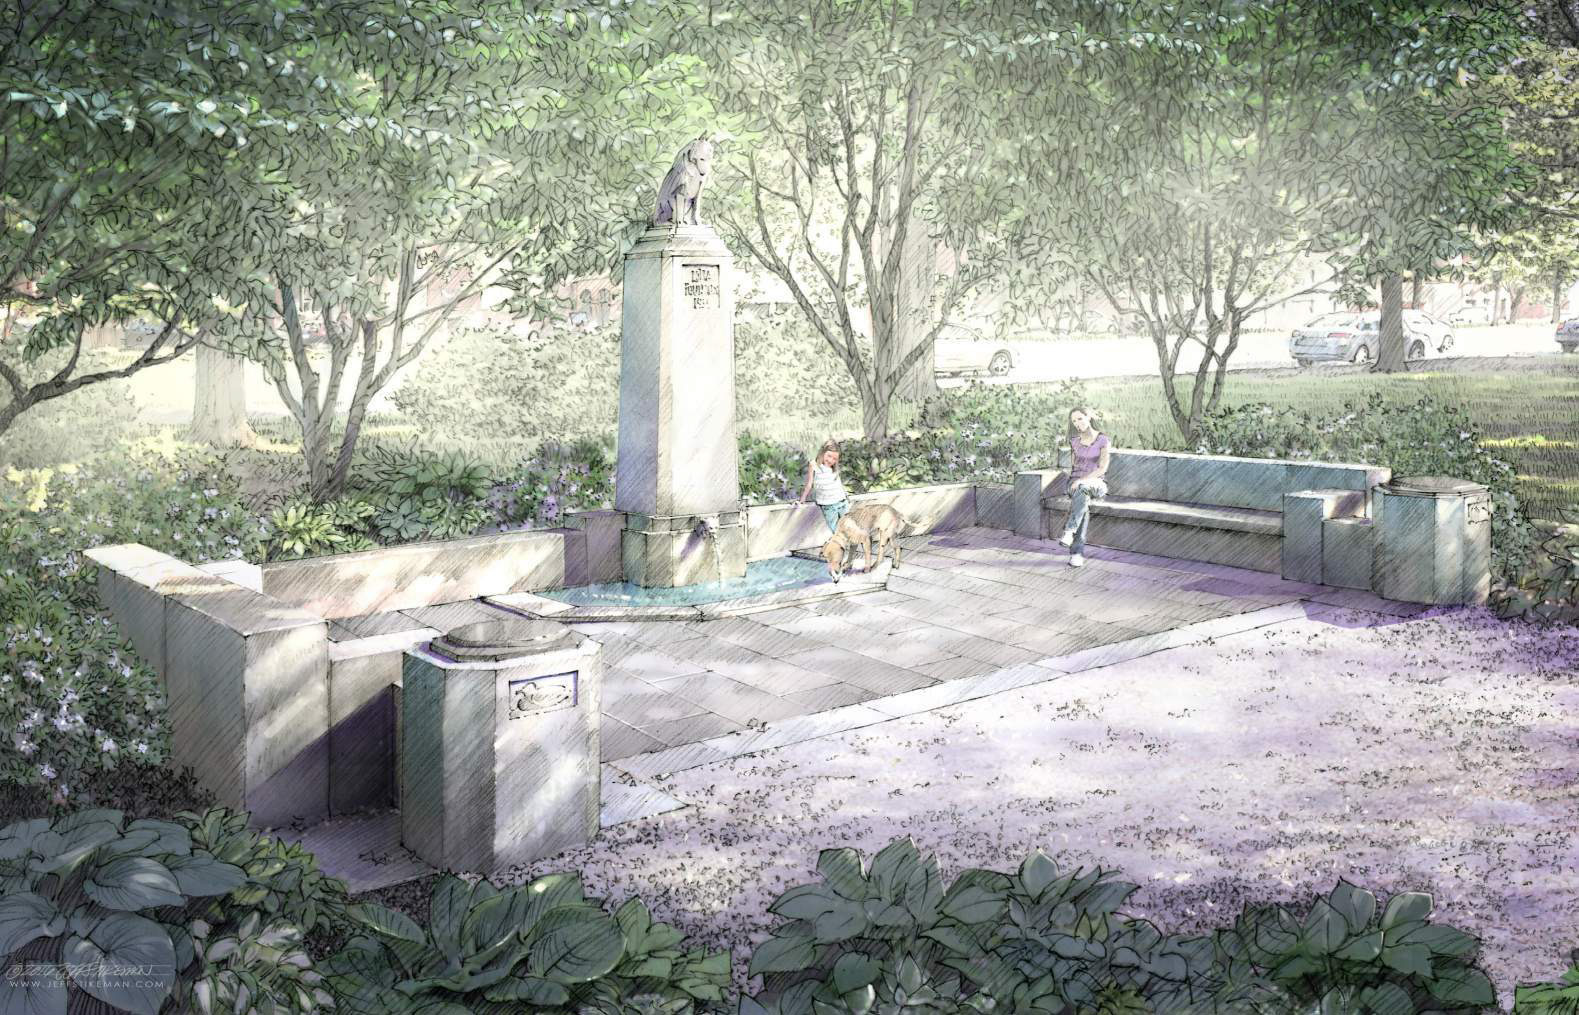 CIVIC Catherine Truman Architects for “Lotta Fountain Restoration” (Copy)